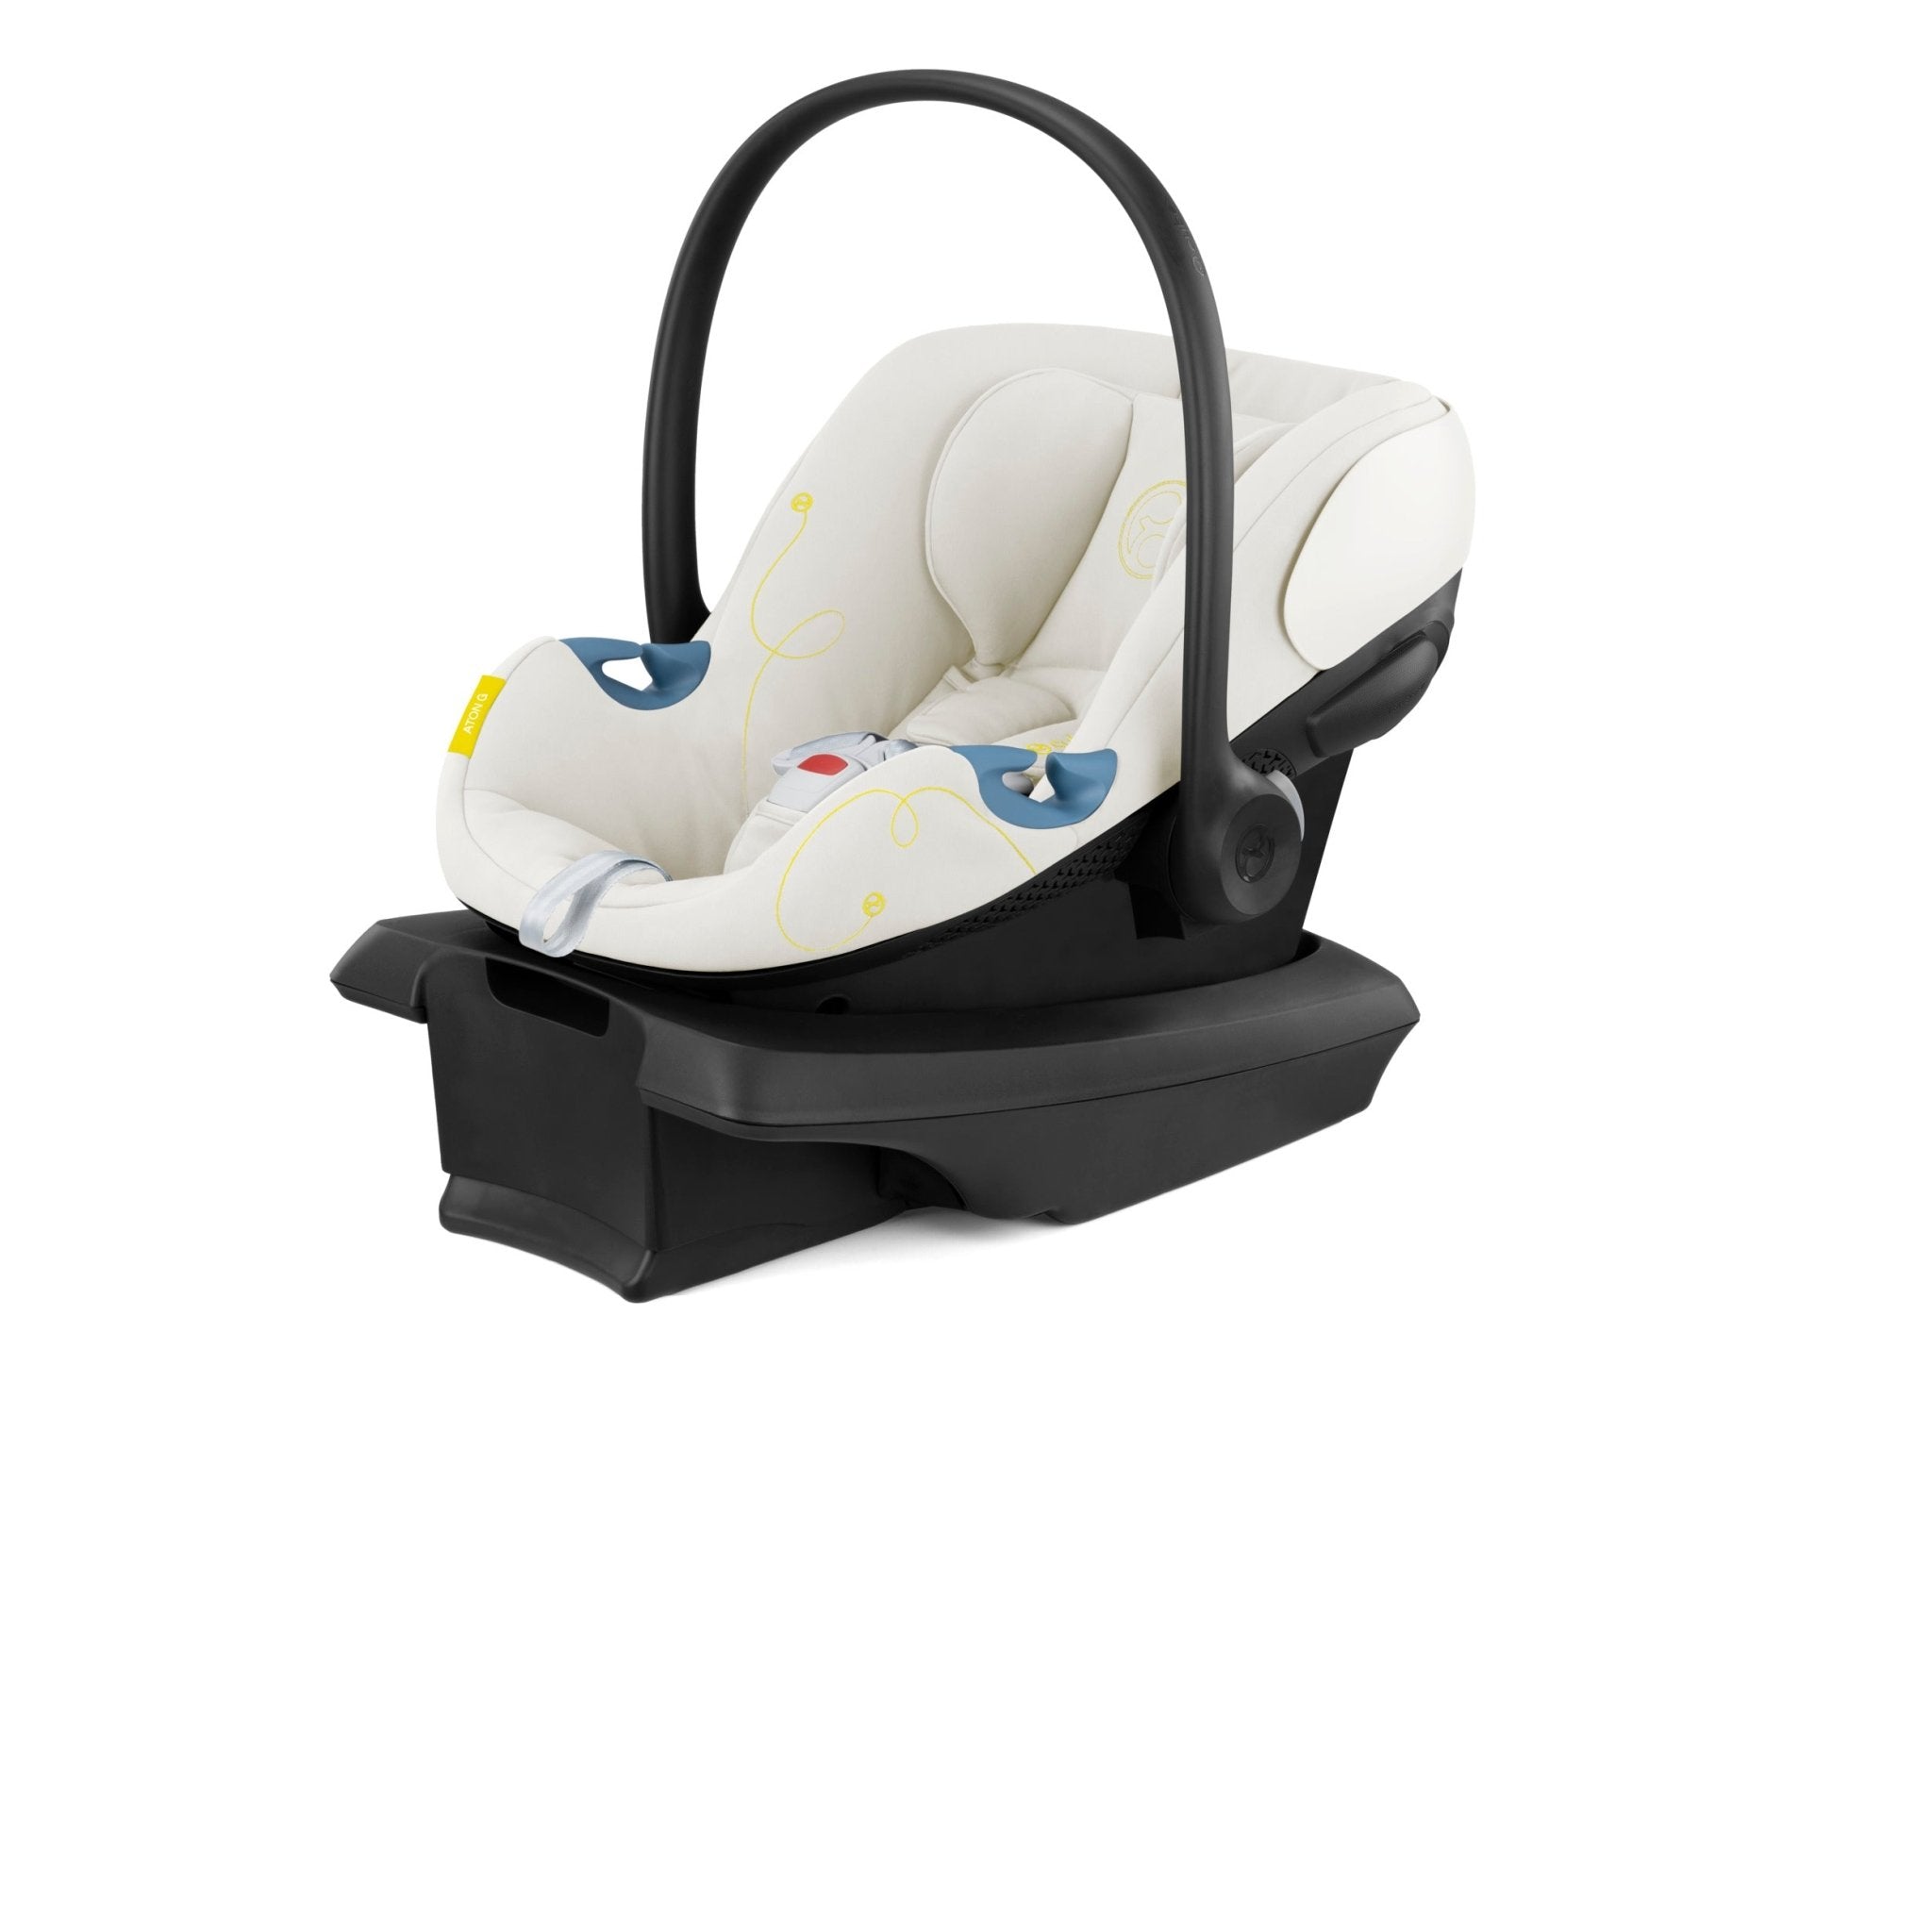 Cybex Aton G Infant Car Seat - ANB Baby -4063846282883$100 - $300